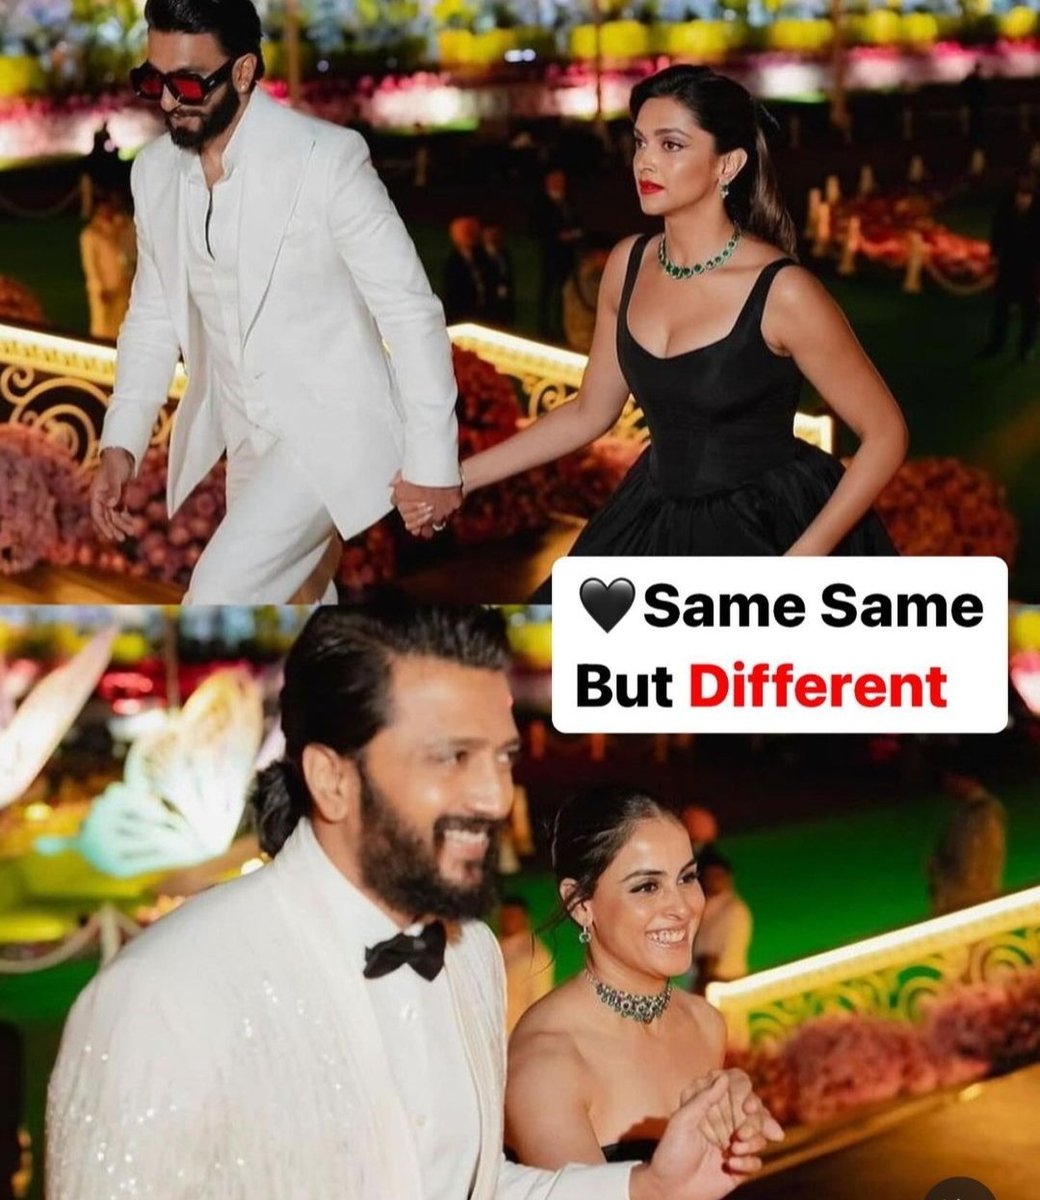 Small gesture huge difference
#DeepikaPadukone #DeepVeer #AmbaniWedding #AmbaniFamilyWedding